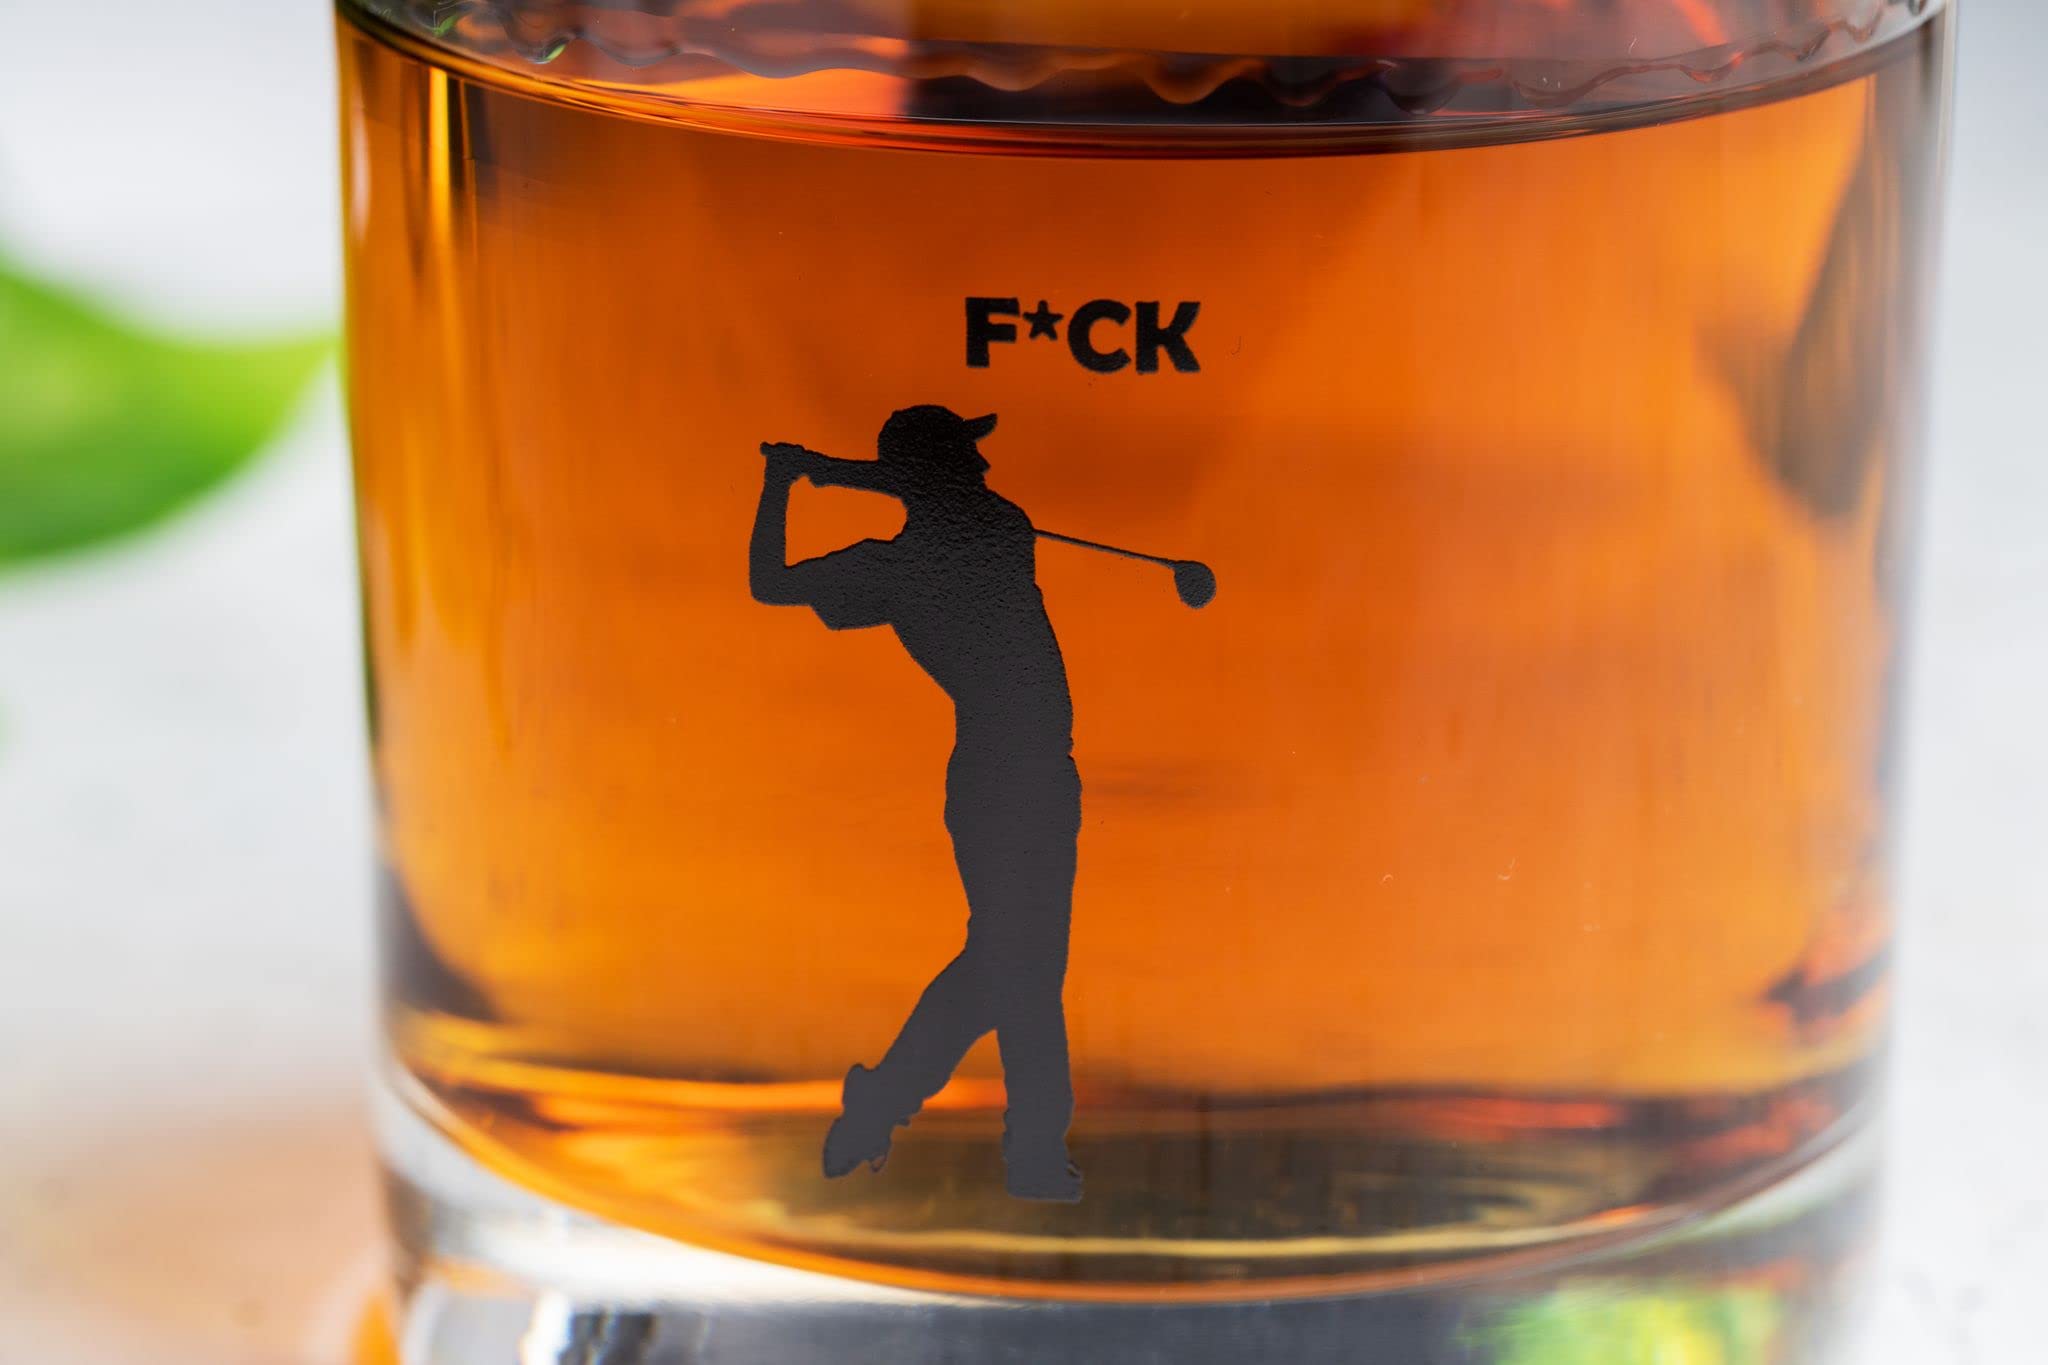 JEM GLASS F*ck Golf Whiskey Glasses - Set of 2 - Black Dishwasher Safe Print - Funny Golf Presents for Men, Women, Dad, Mom, Husband, Wife, Him, Her - 10.25 Ounces Each